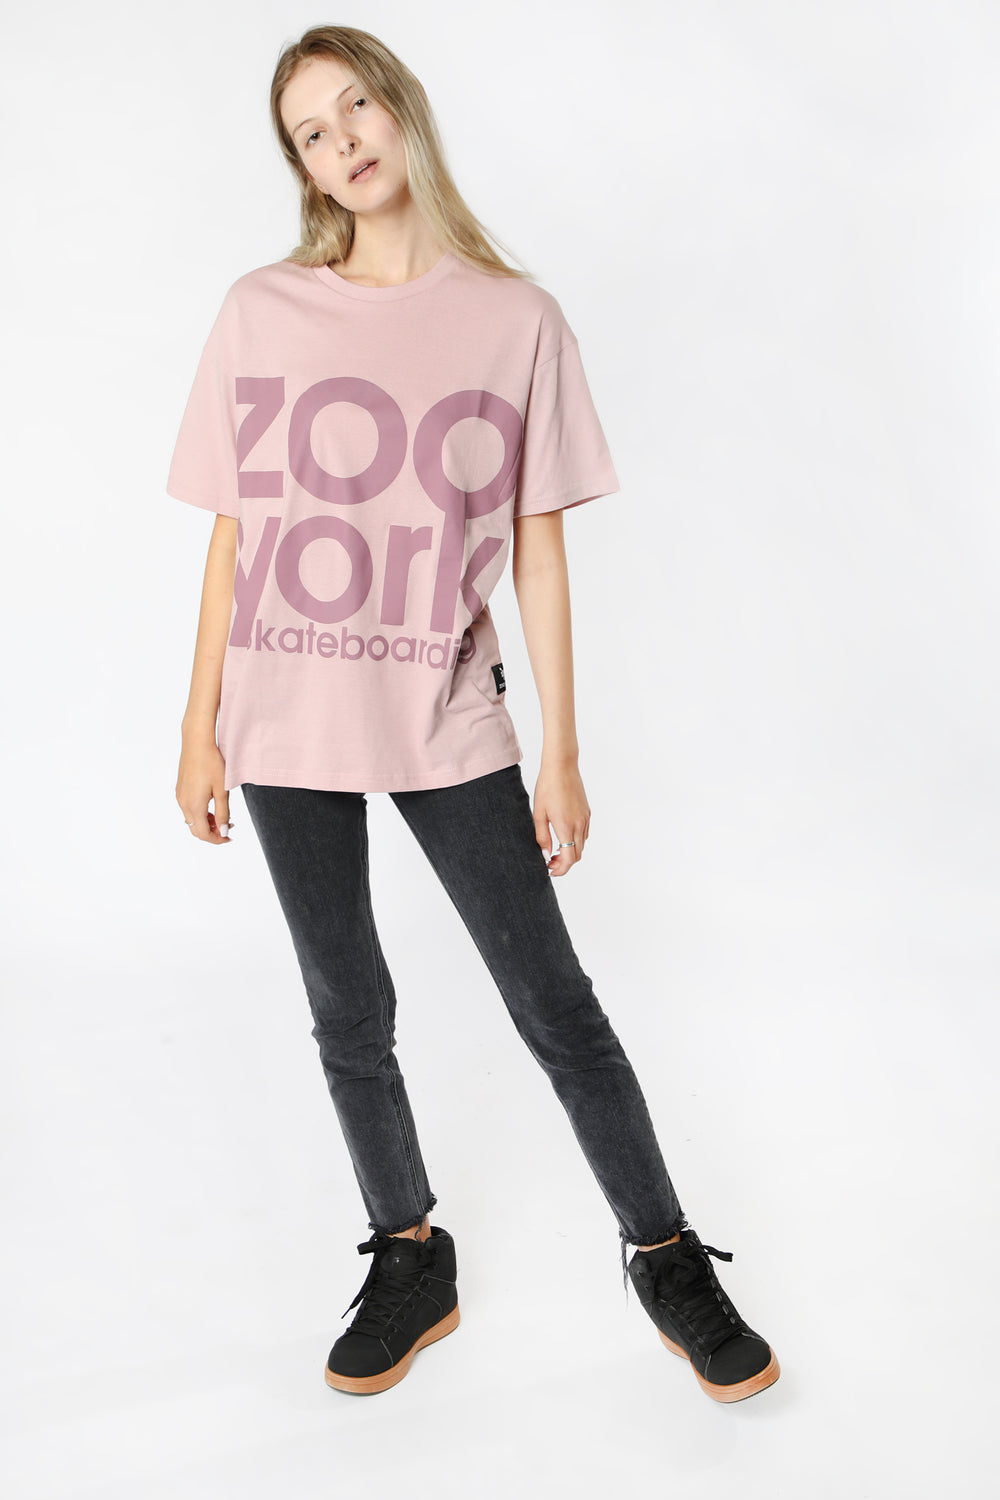 T-Shirt Unisexe Imprimé Grand Logo Zoo York Skateboarding Lilas